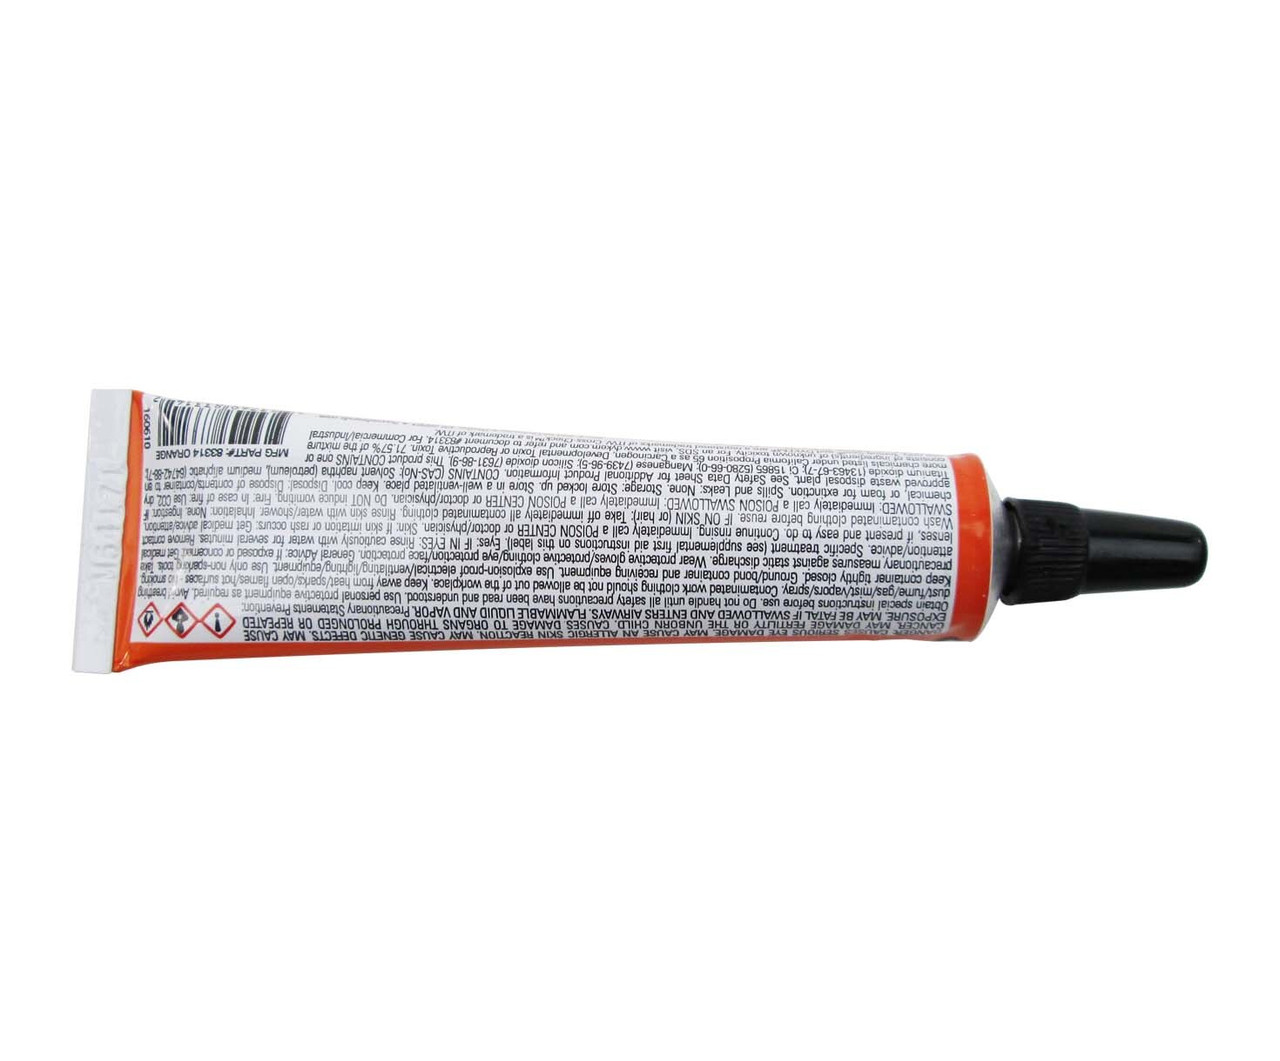 DYKEM Cross-Check - Tamperproof Marker / Torque Seal - 1 oz Tube (24 Pack,  Orange) 